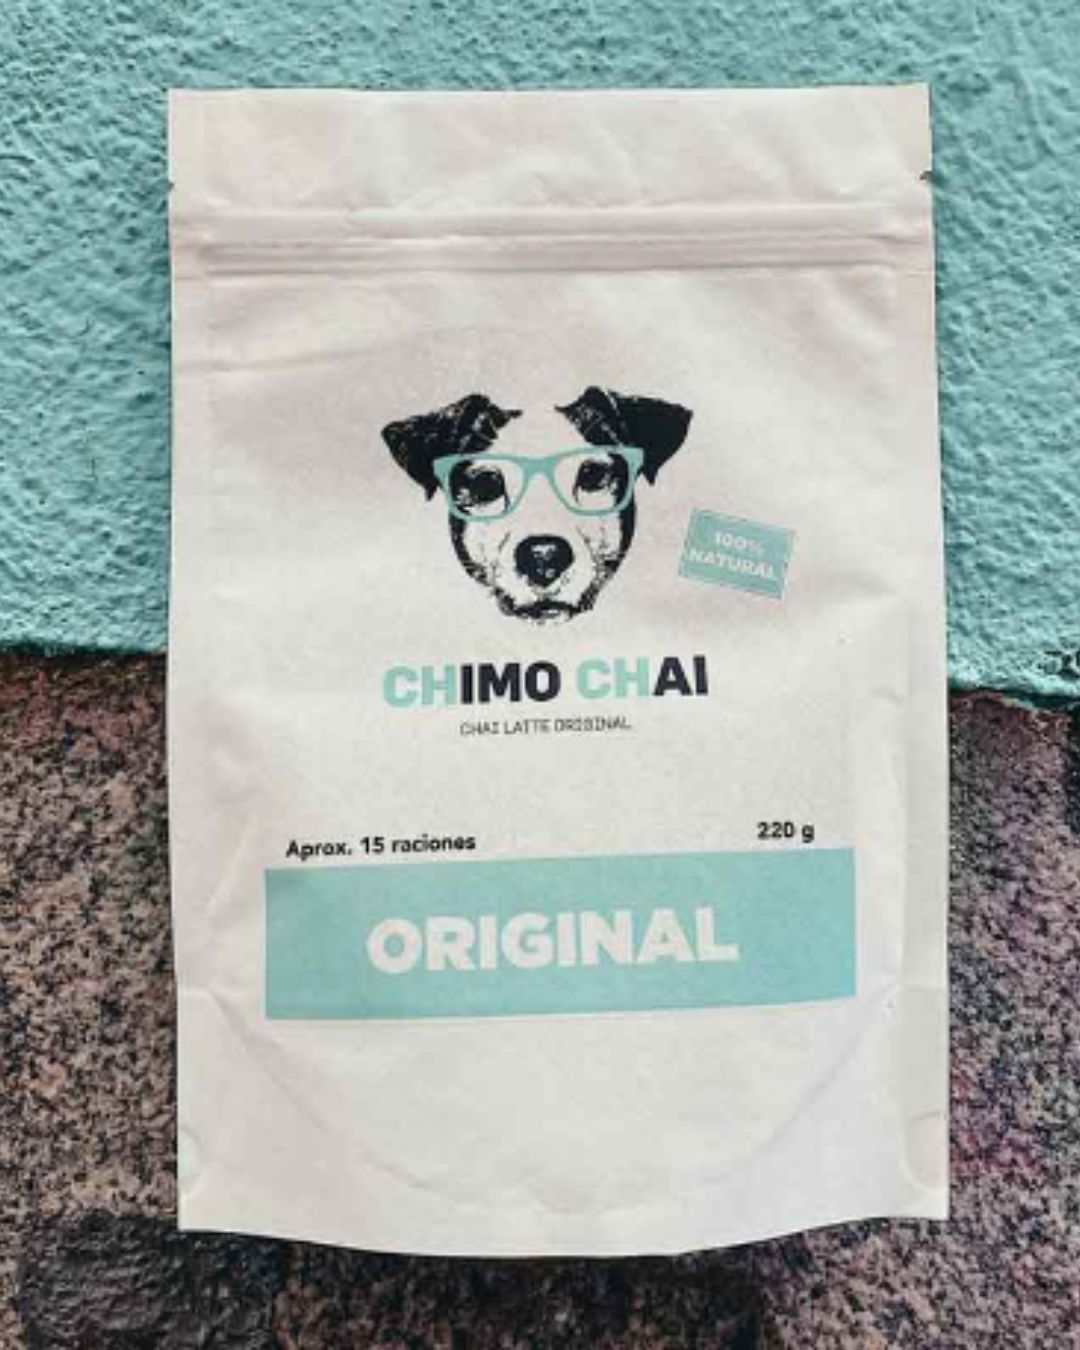 Chimo Chai Original 220g